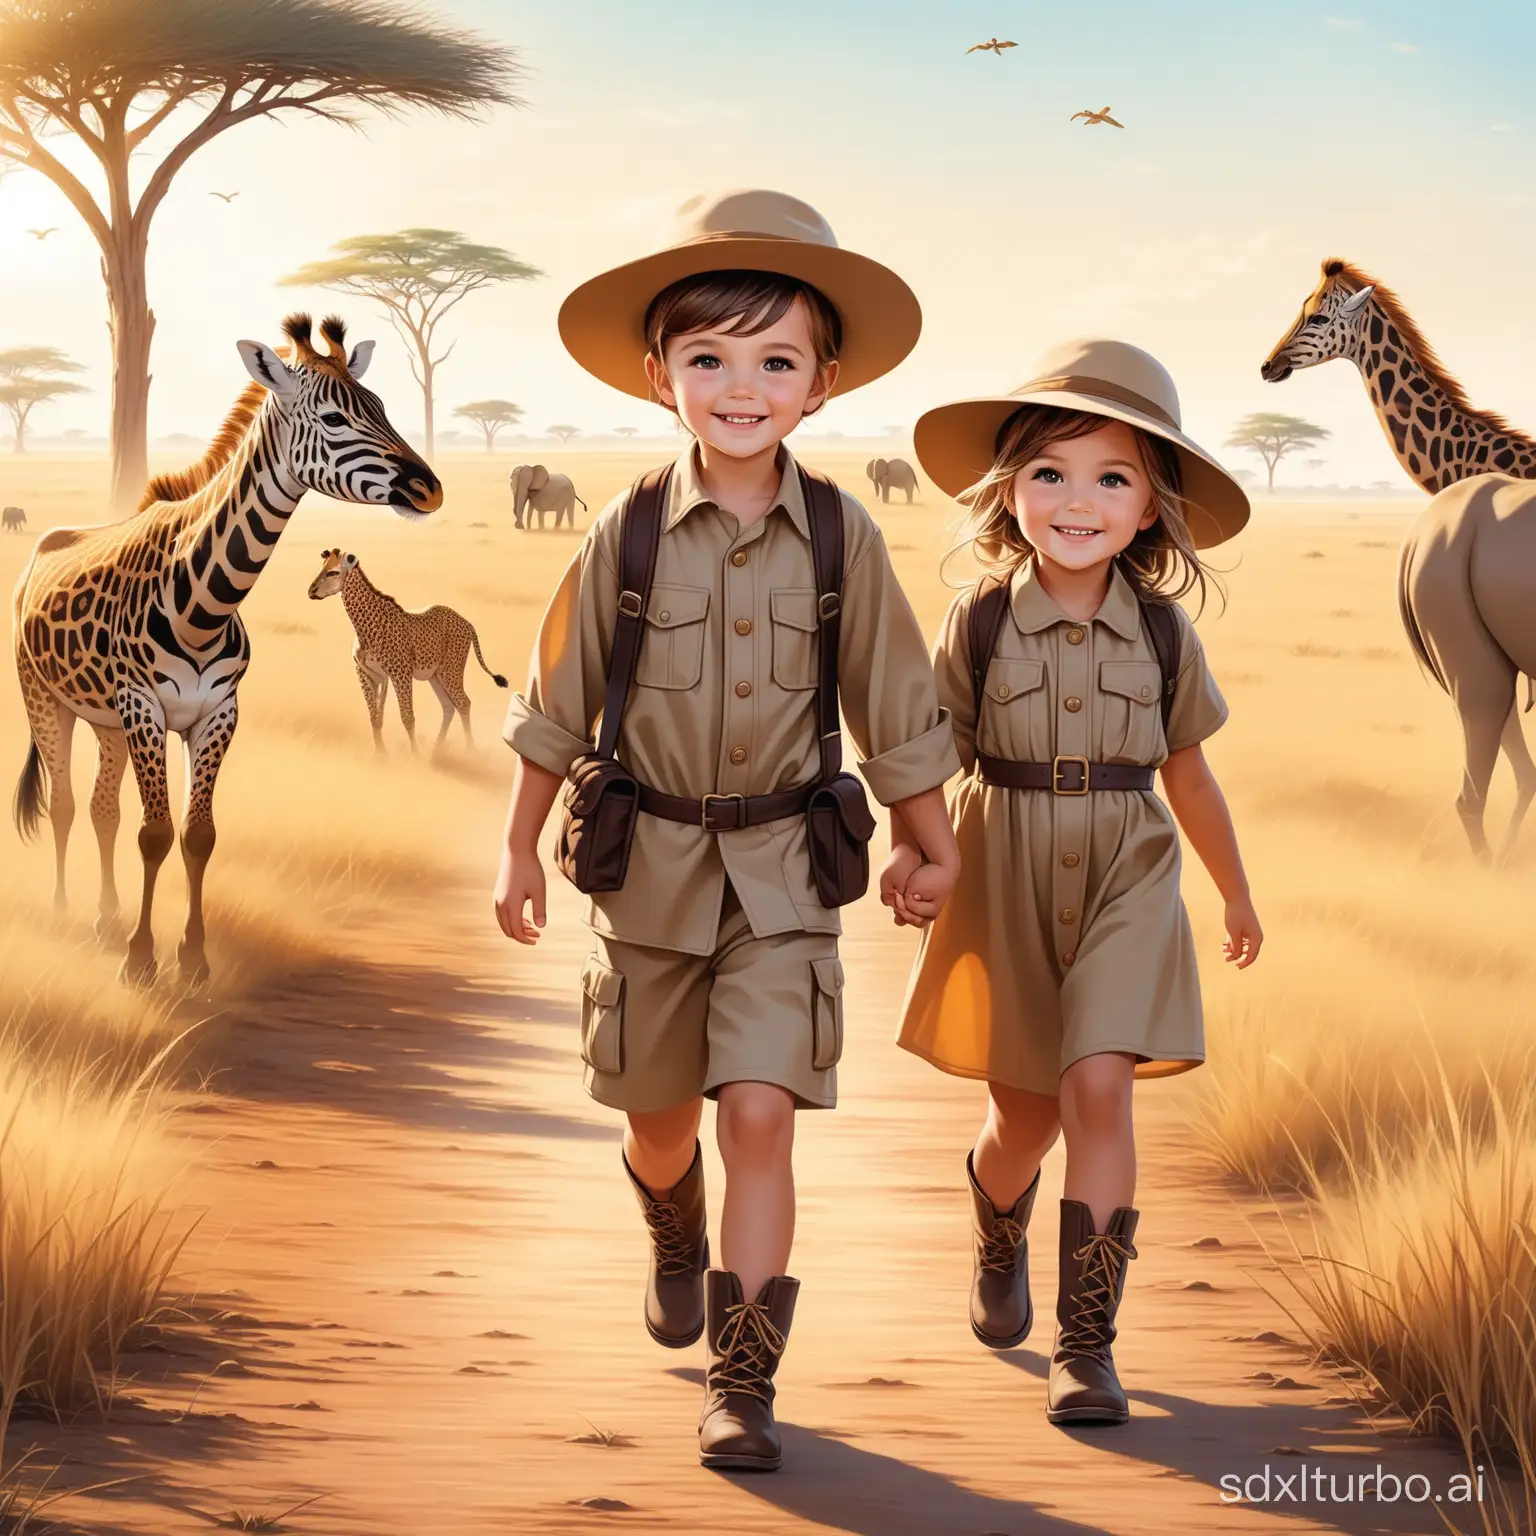 Adorable-Safari-Kids-Explore-Savanna-with-Smiling-Animals